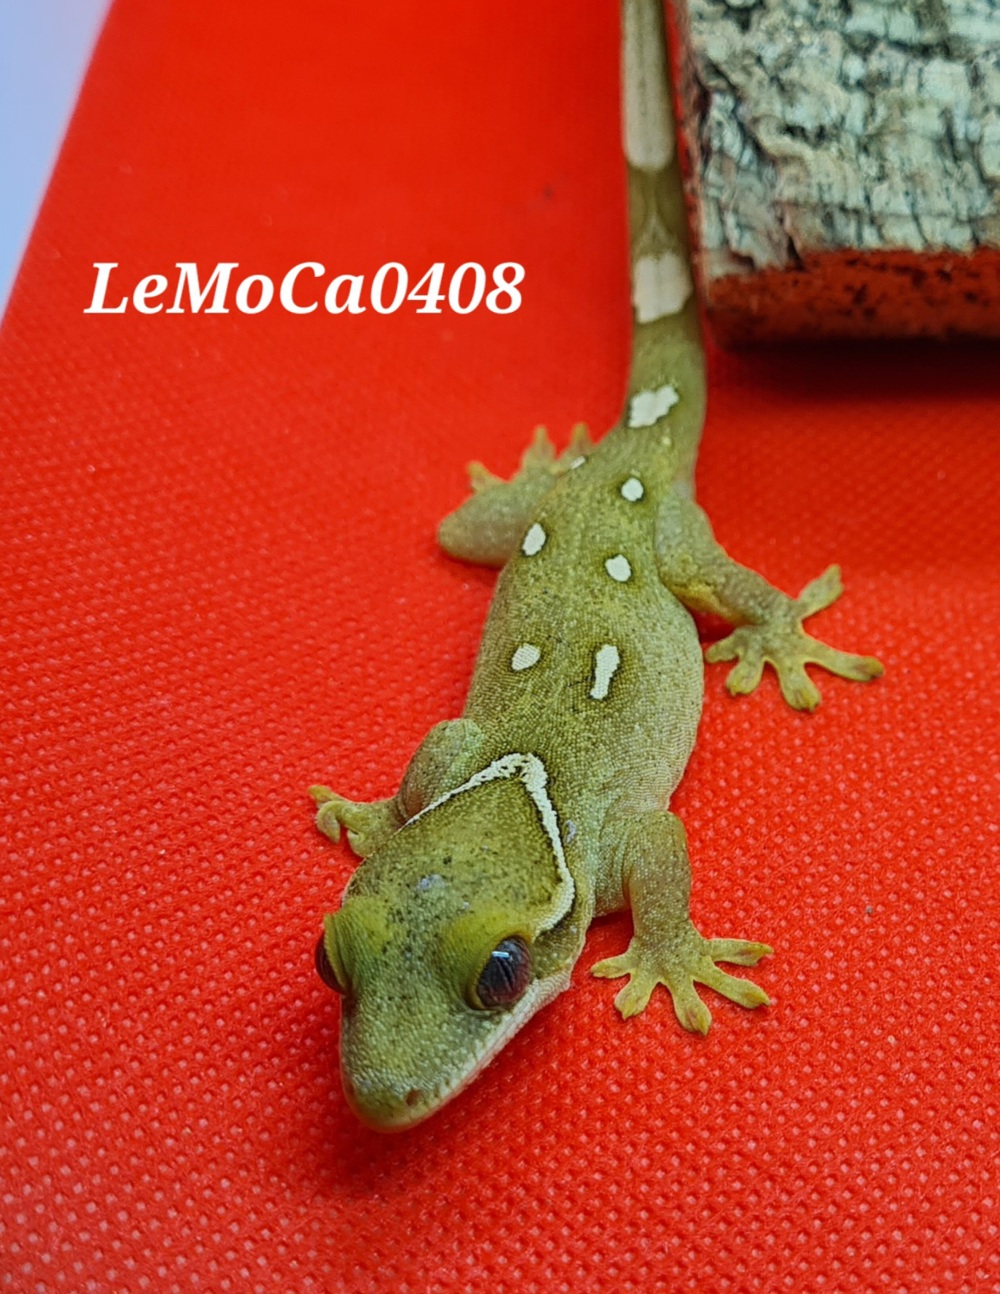 Sarasins Gecko, Correlophus Sarasinorum